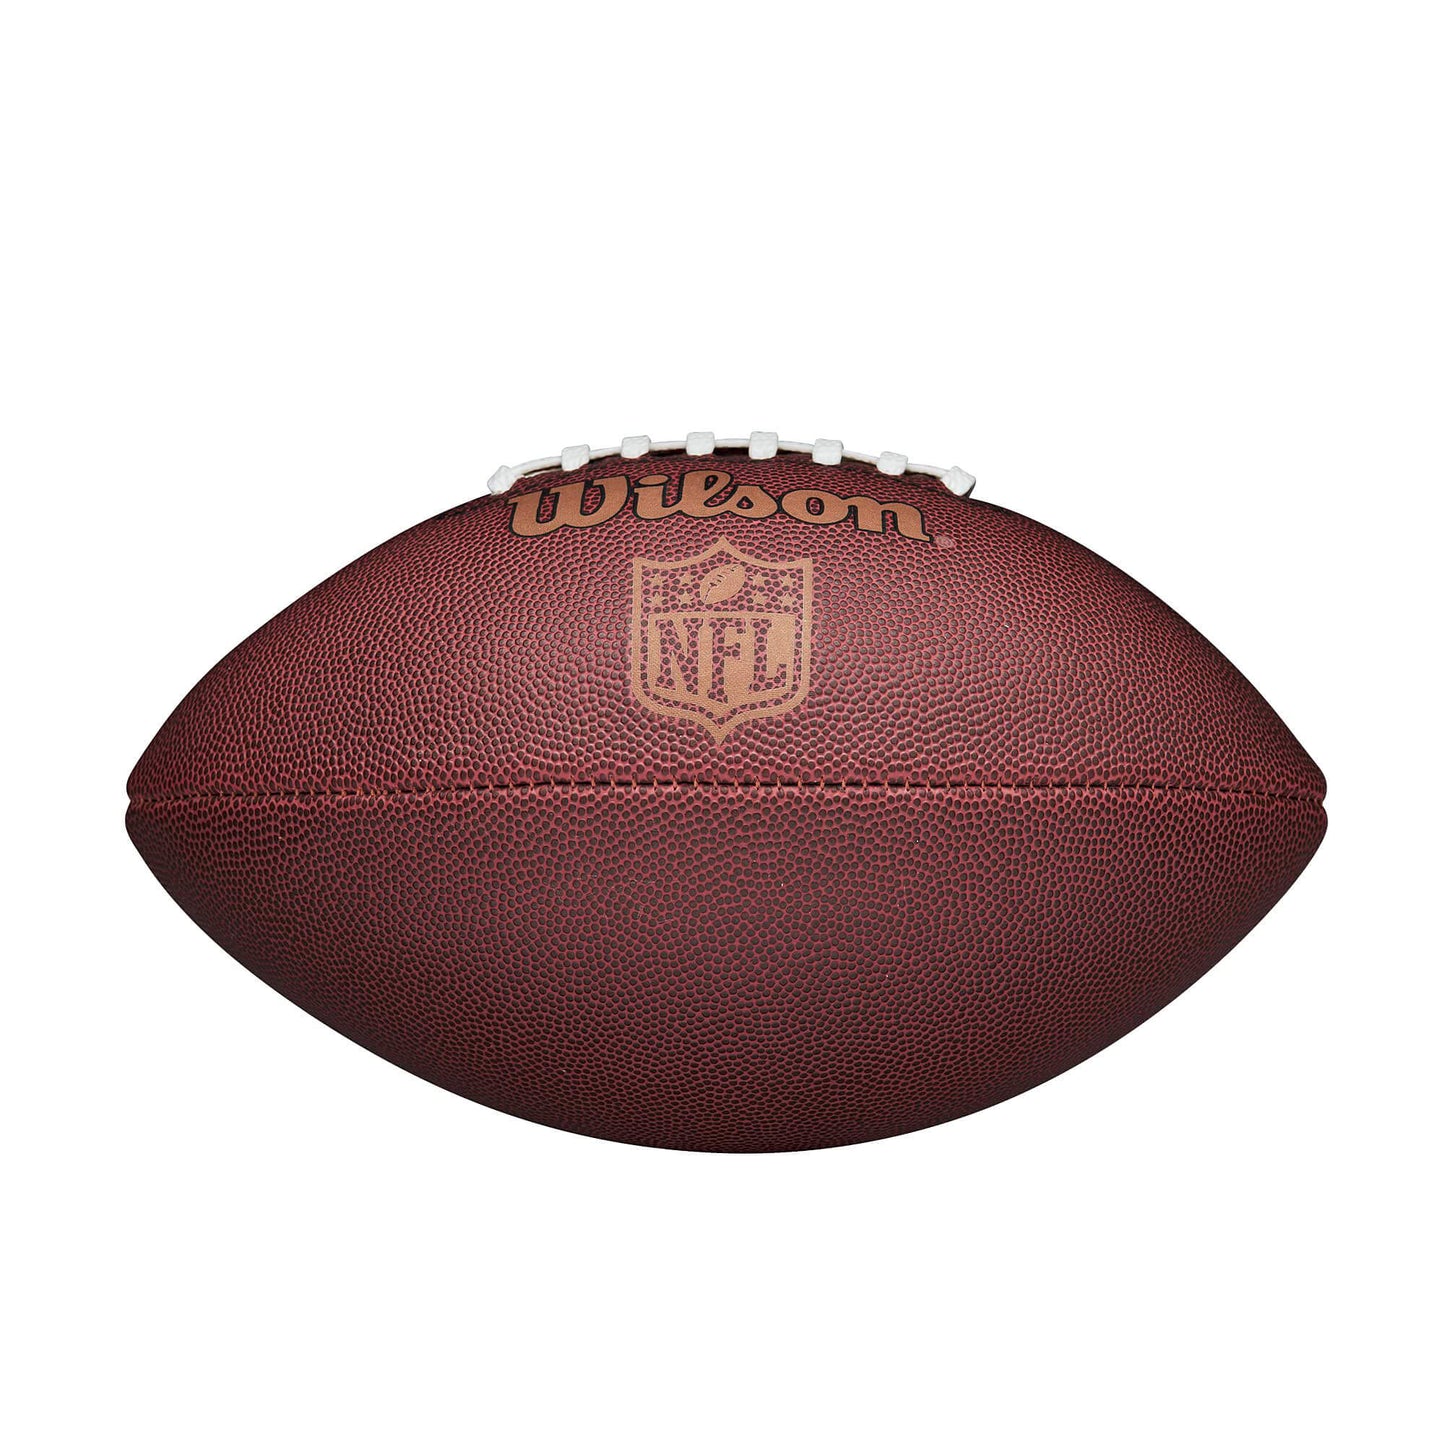 Wilson NFL Ignition Football - Jr. - Brown